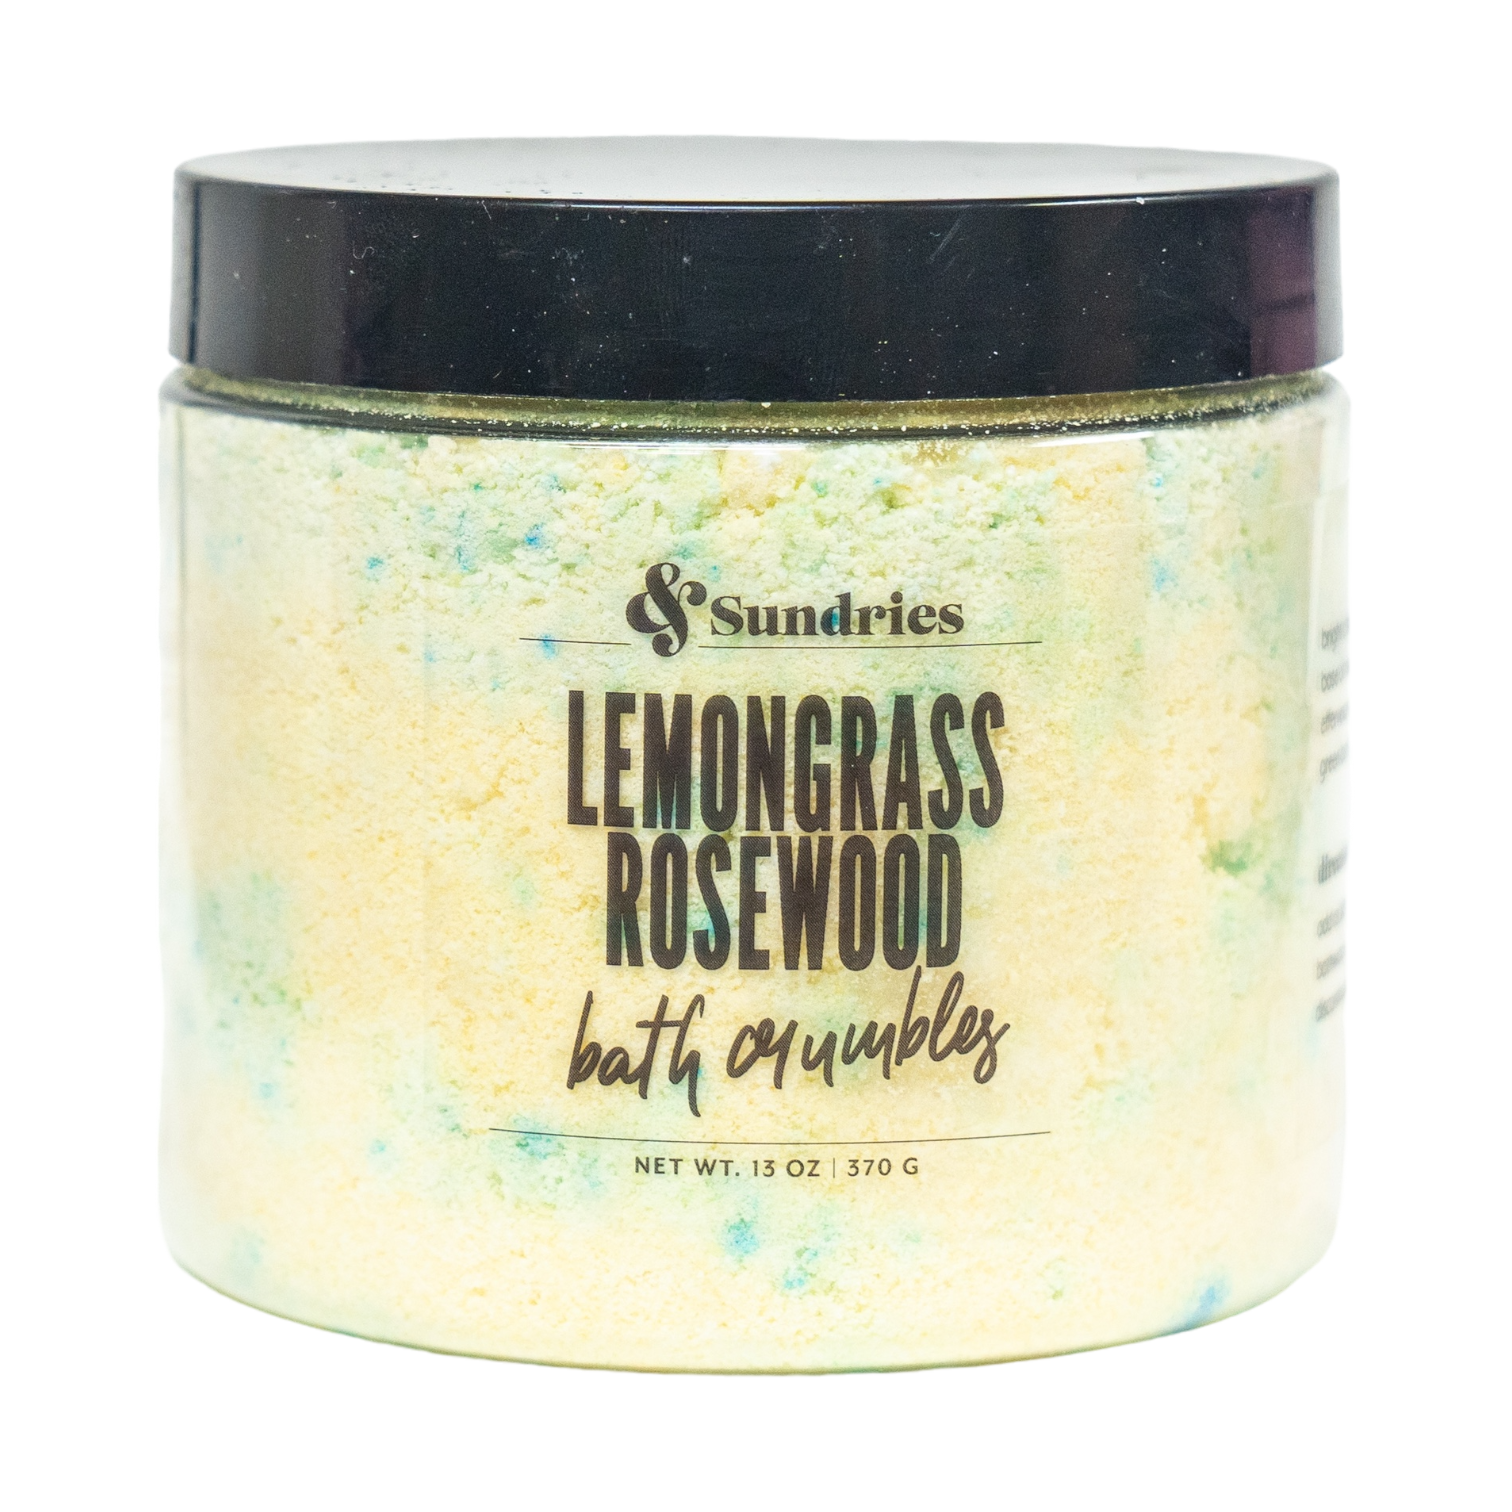 Lemongrass Rosewood Bath Crumbles